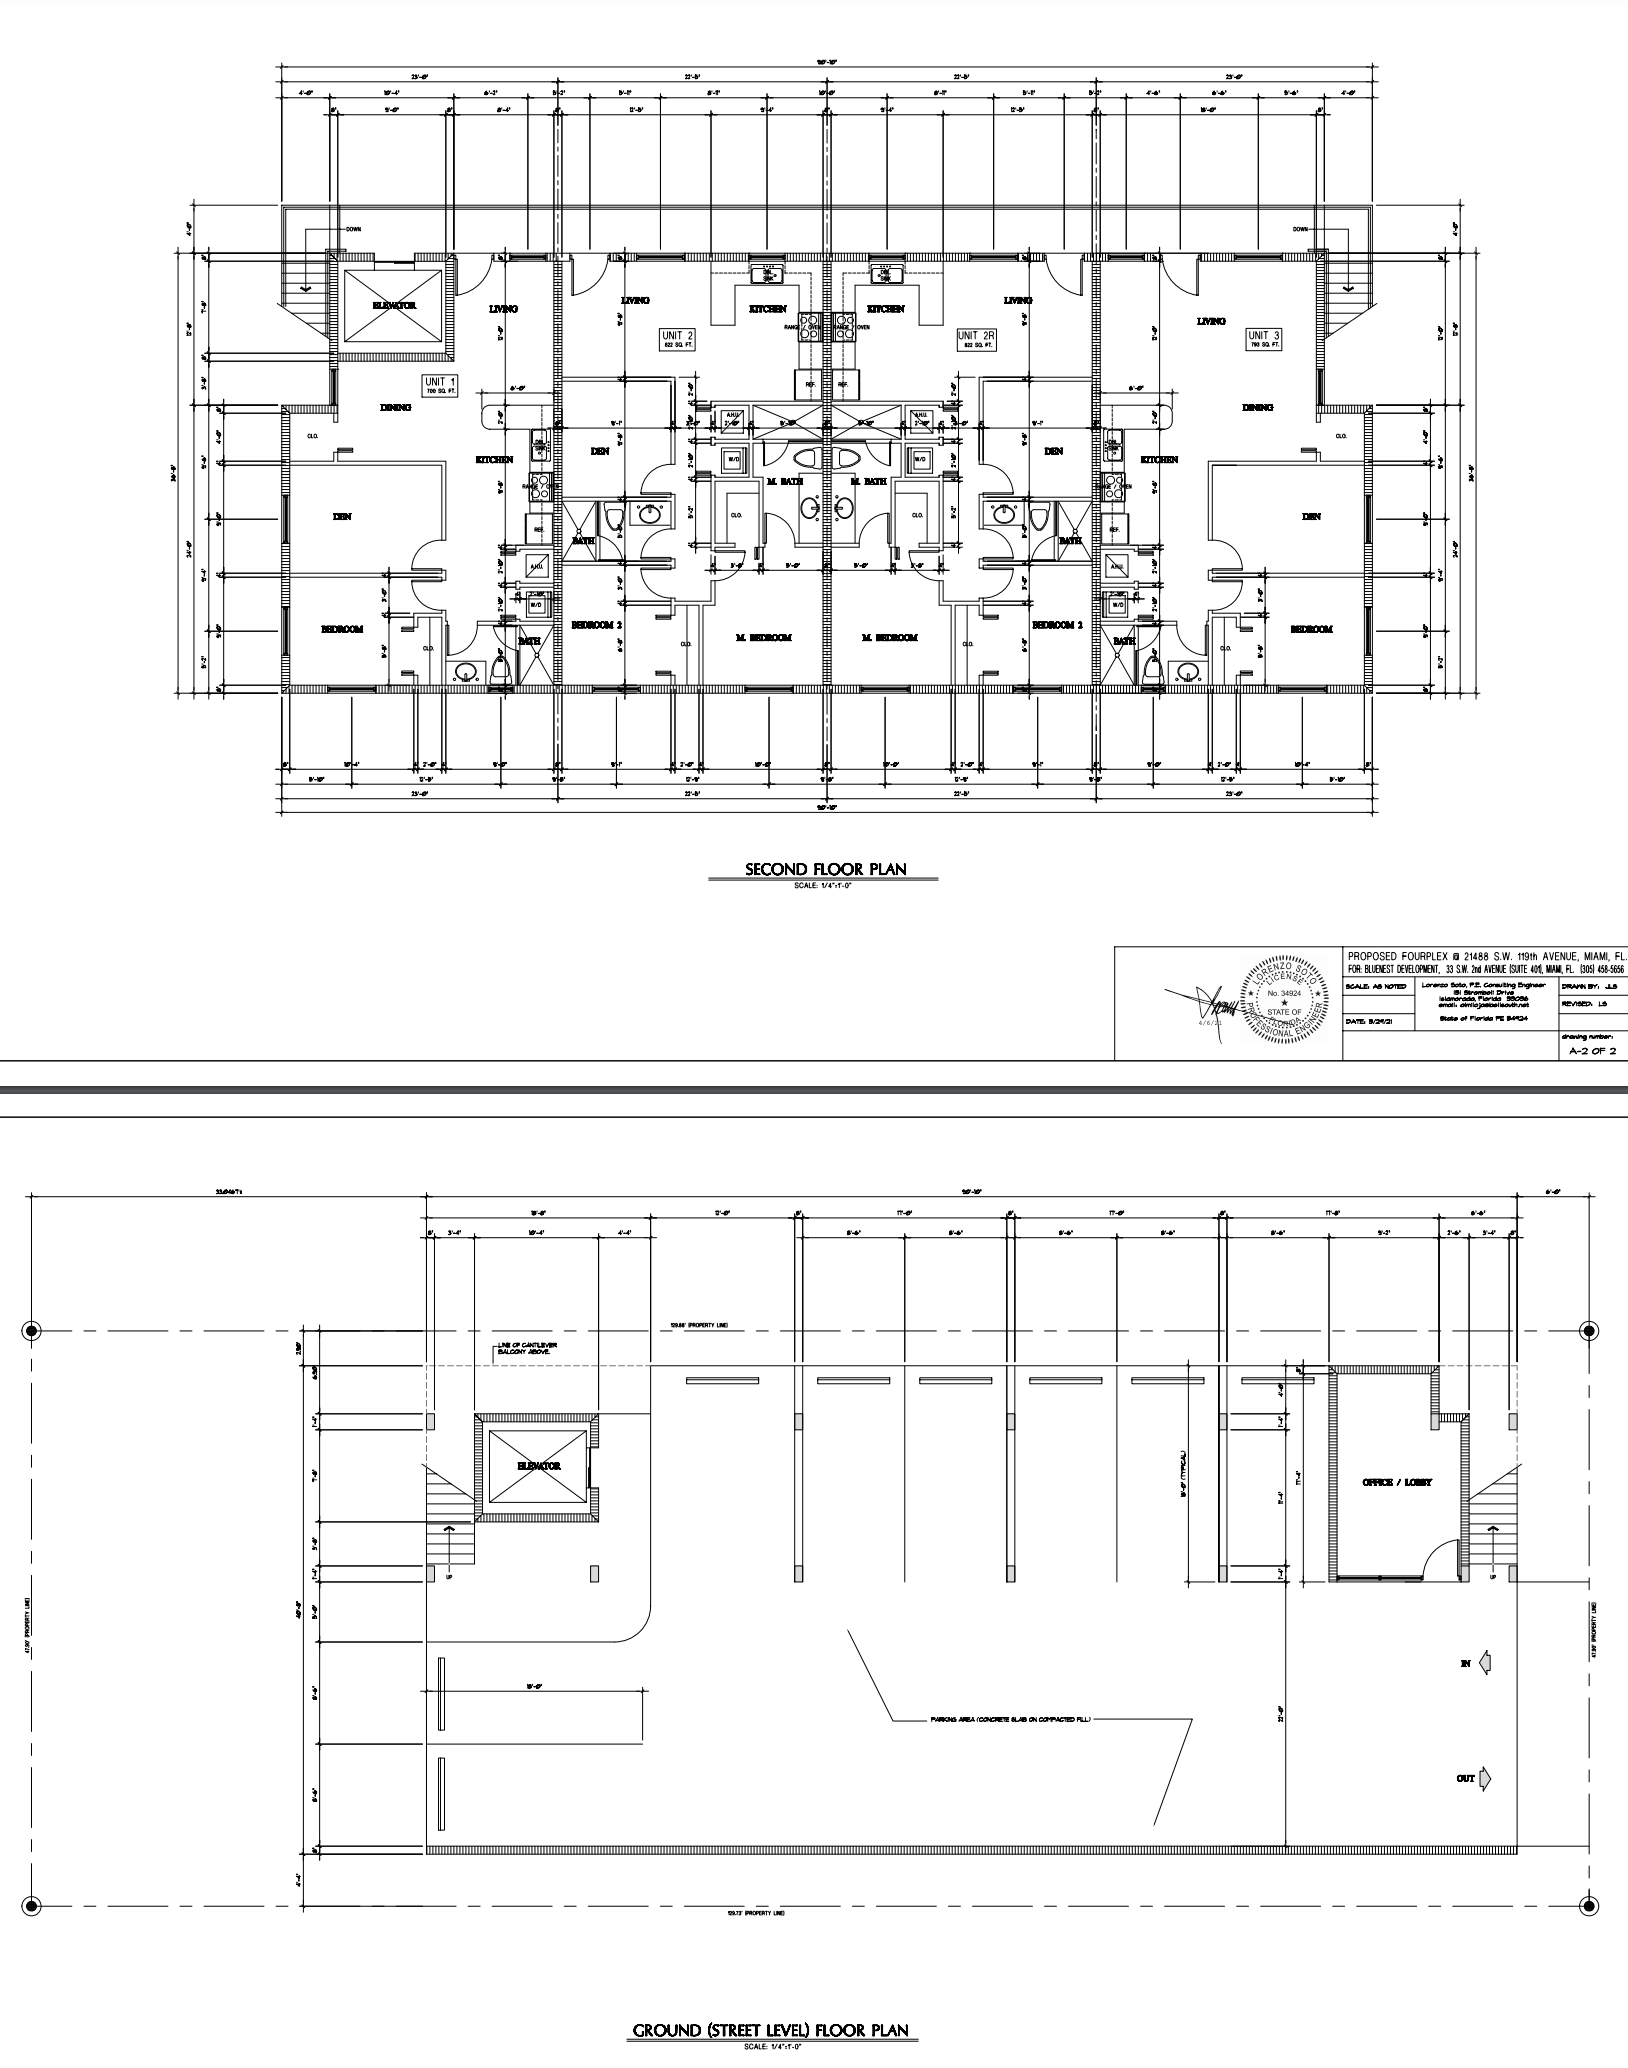 Floor Plans at 21488 SW 119th Avenue. Courtesy of Bluenest Development.